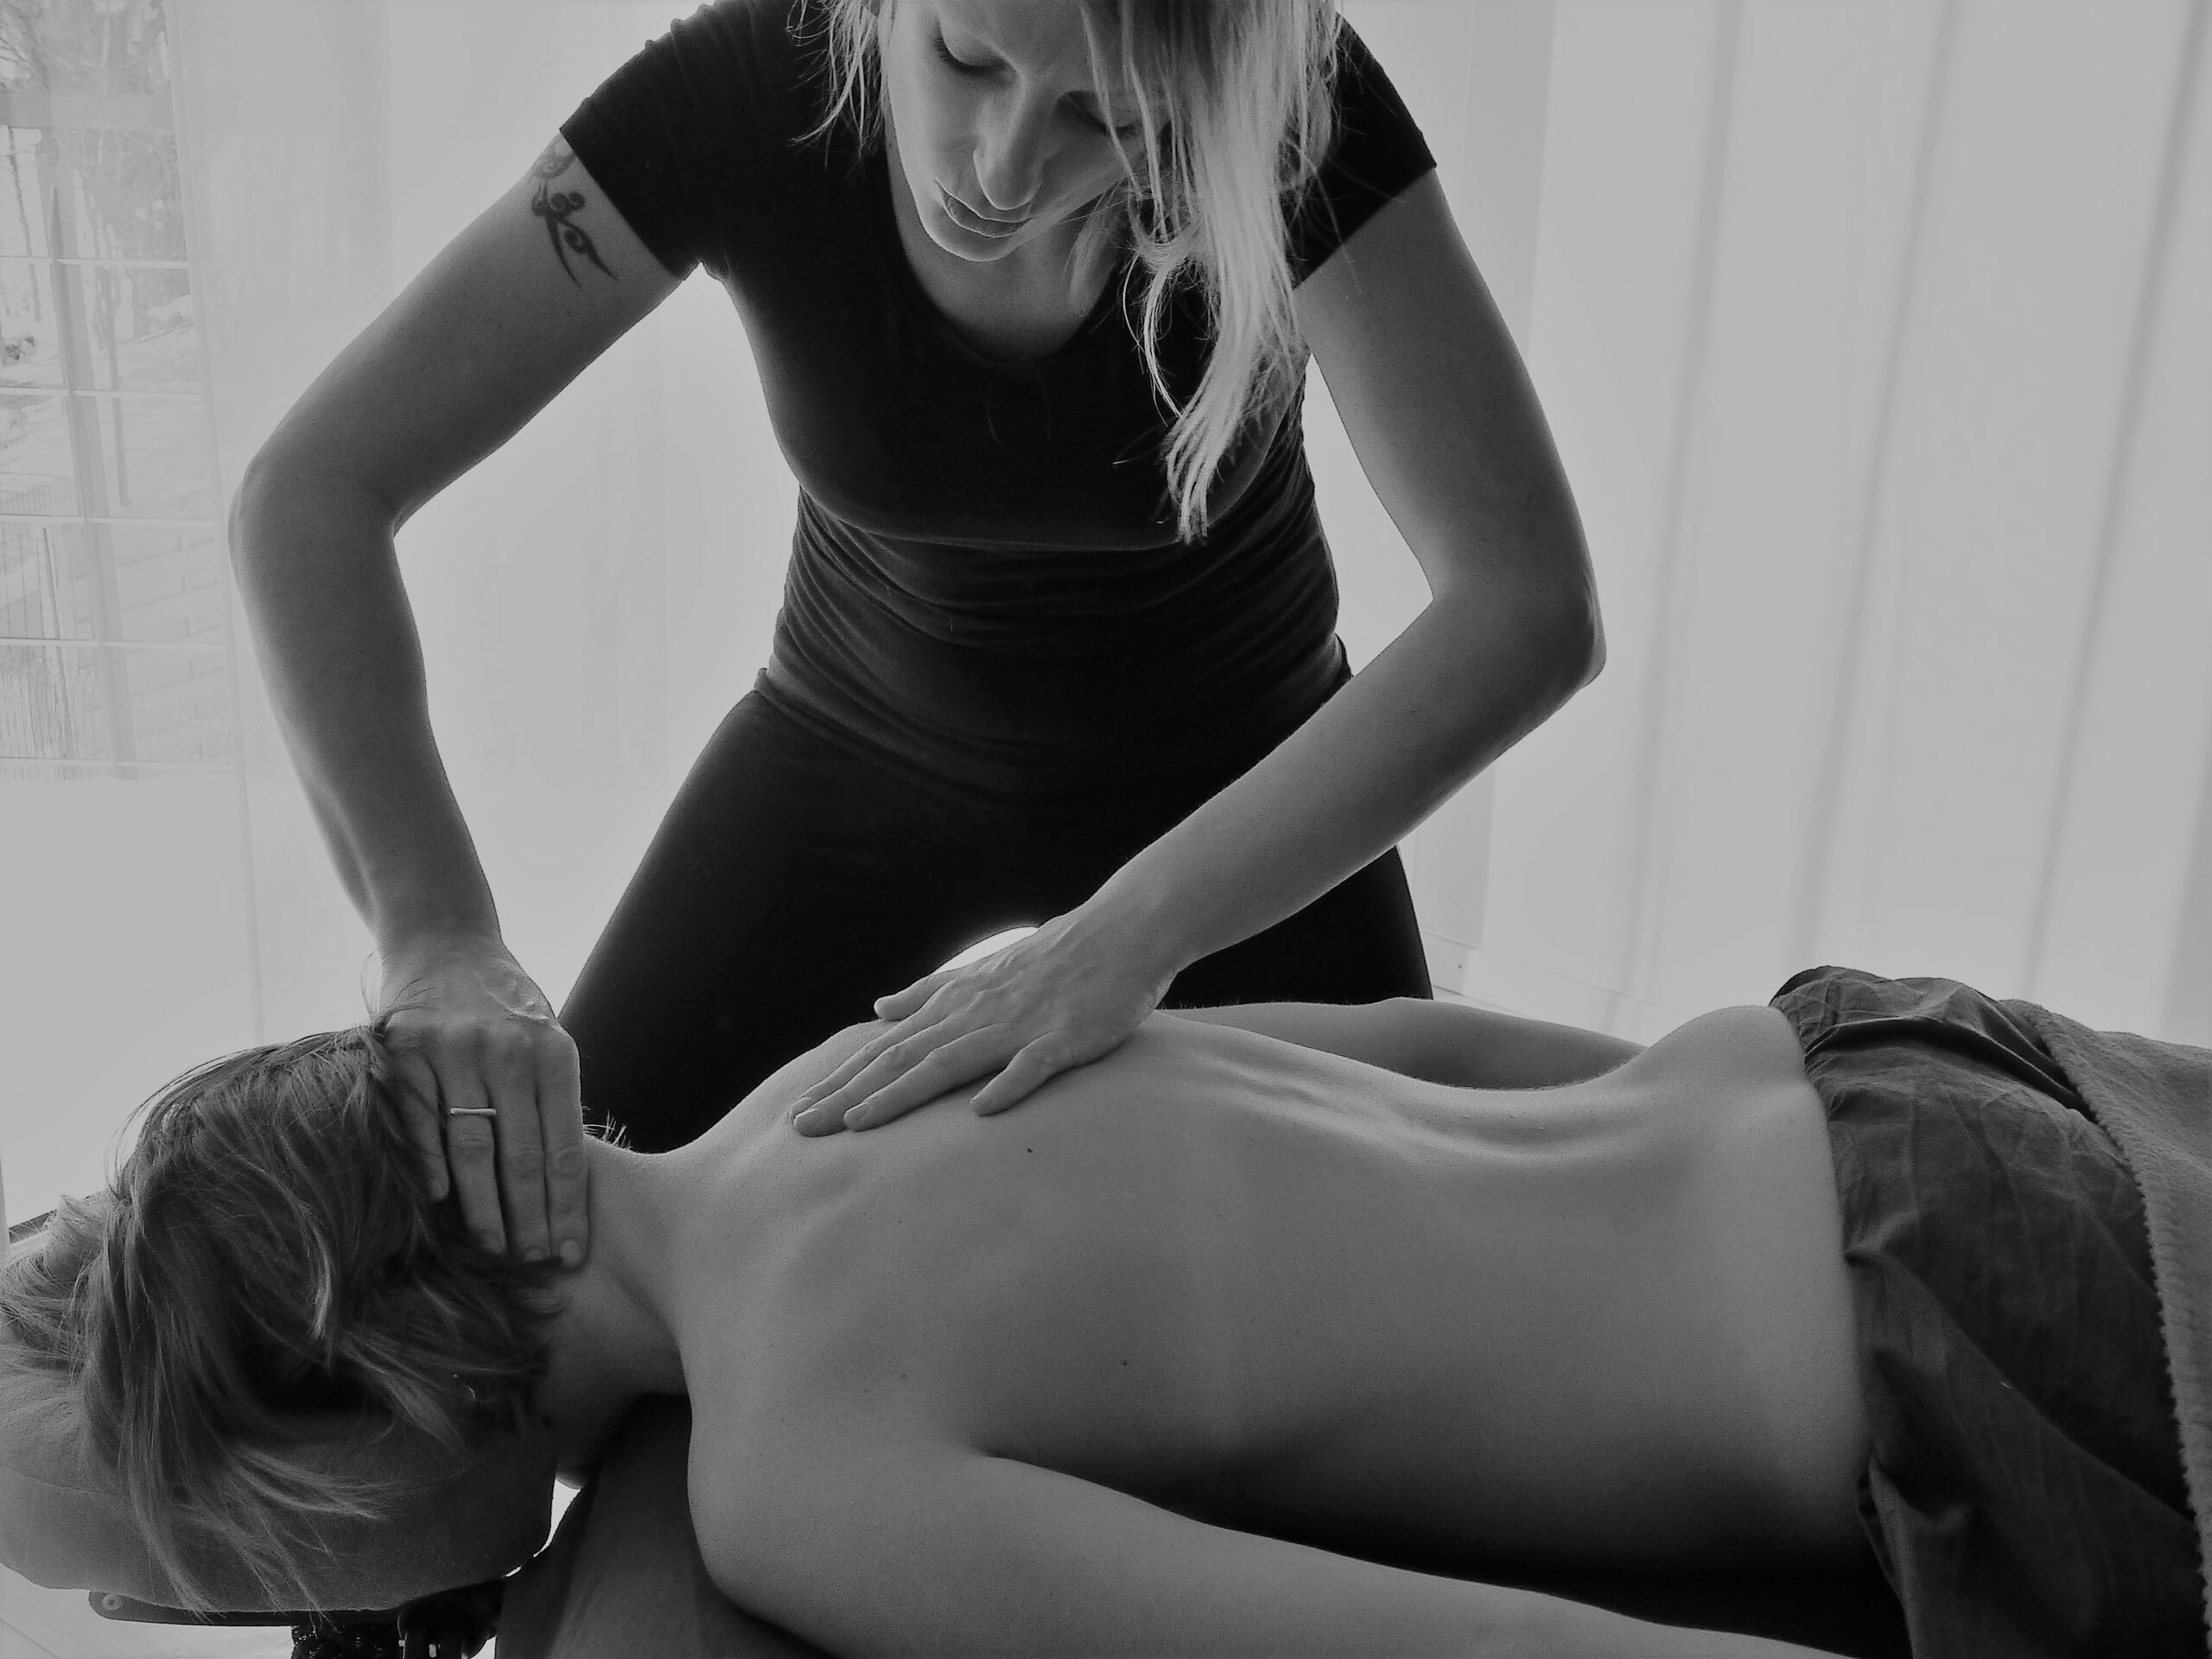 A massage at home?